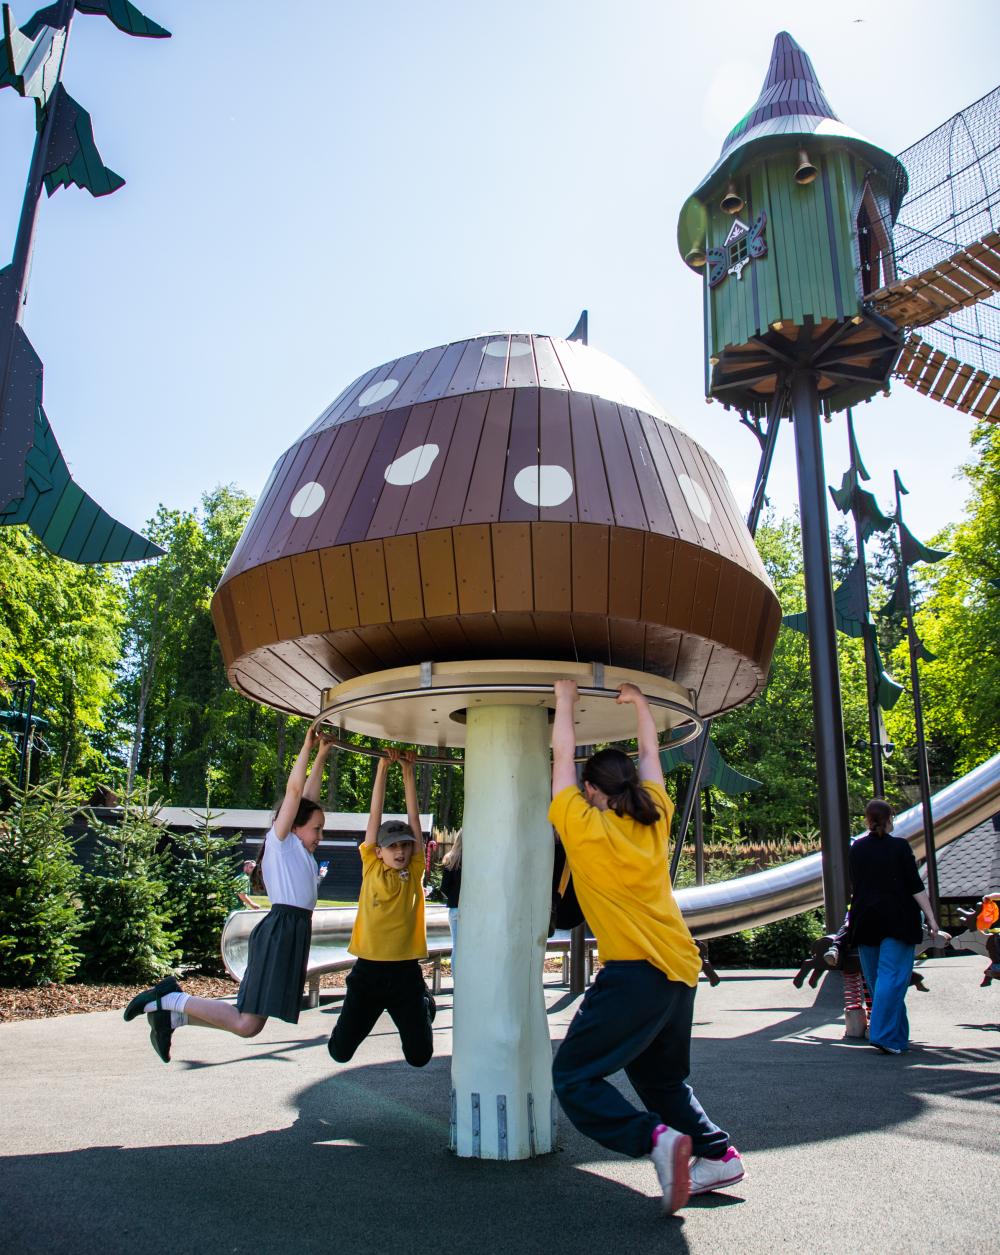 Kids spinning round on mushroom carrousel at Lilidorei playground